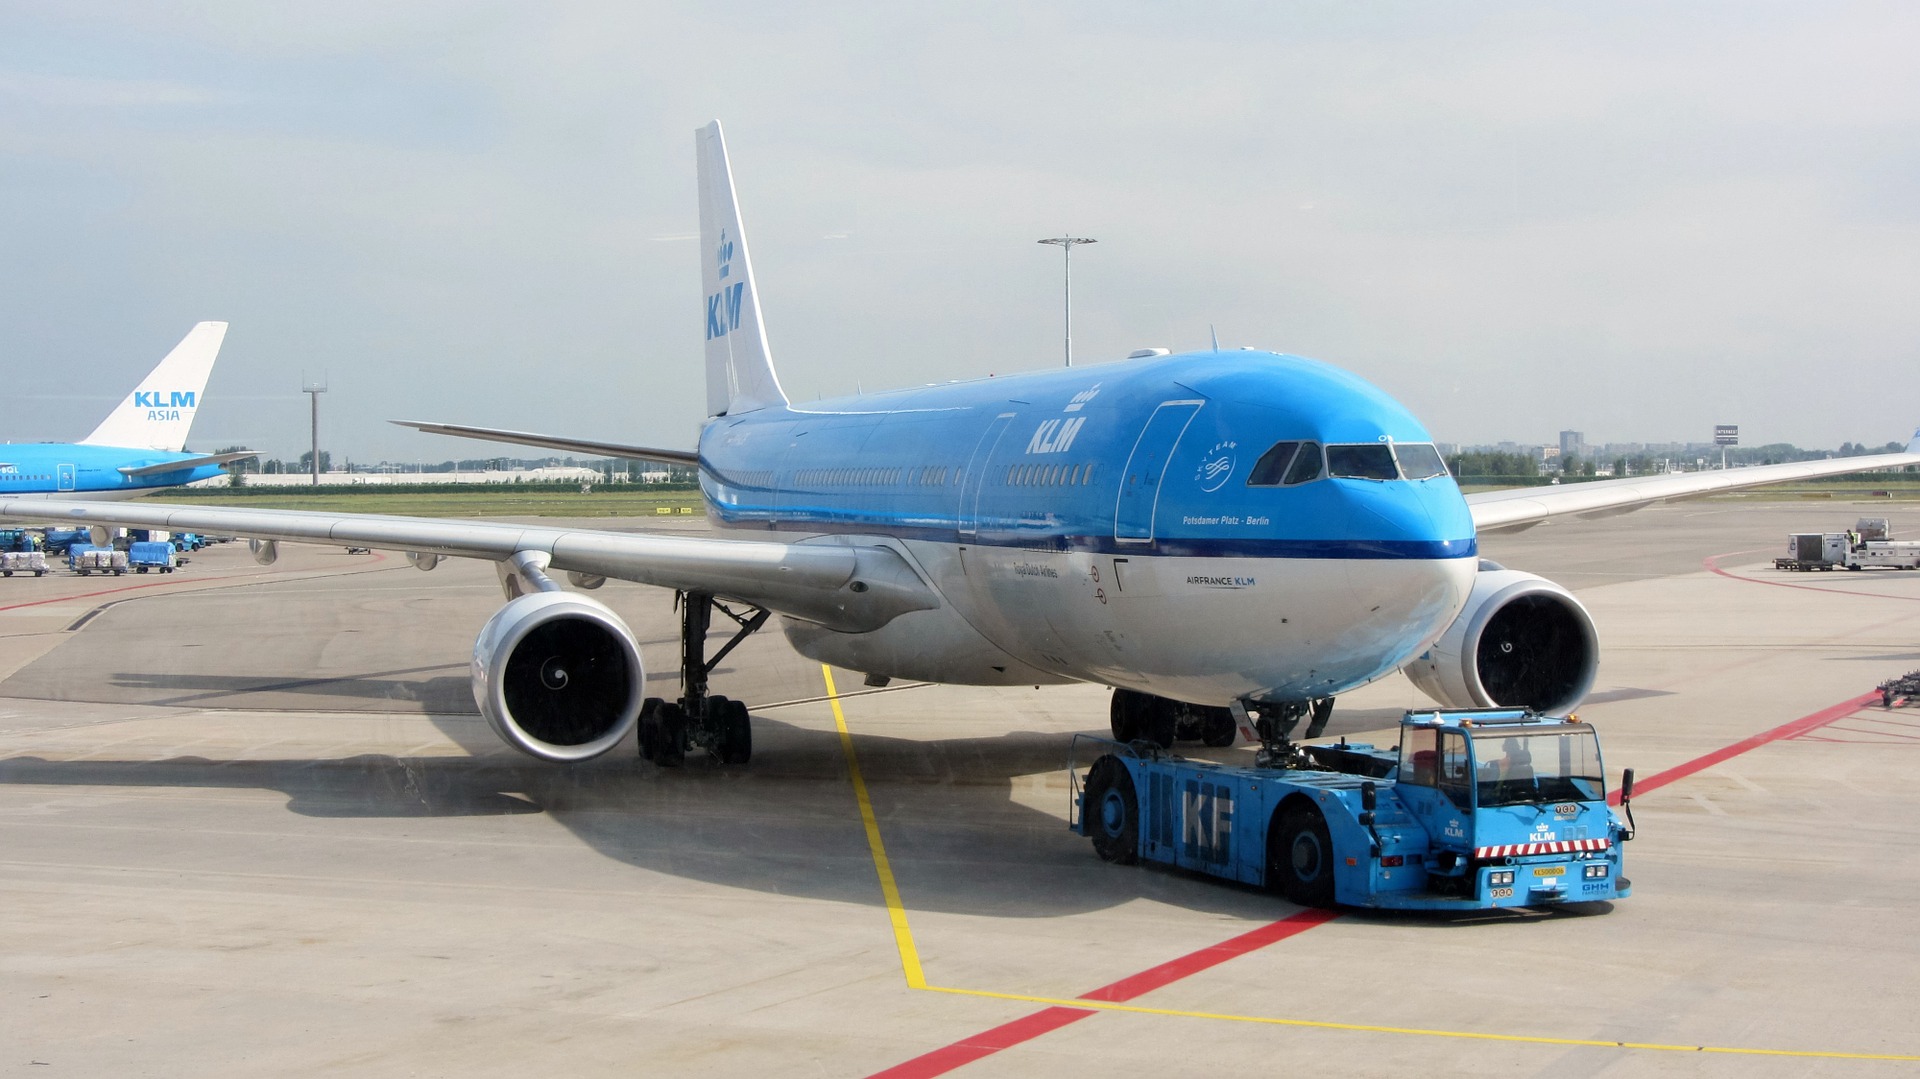 Goedkoop vliegticket met KLM naar Dubai